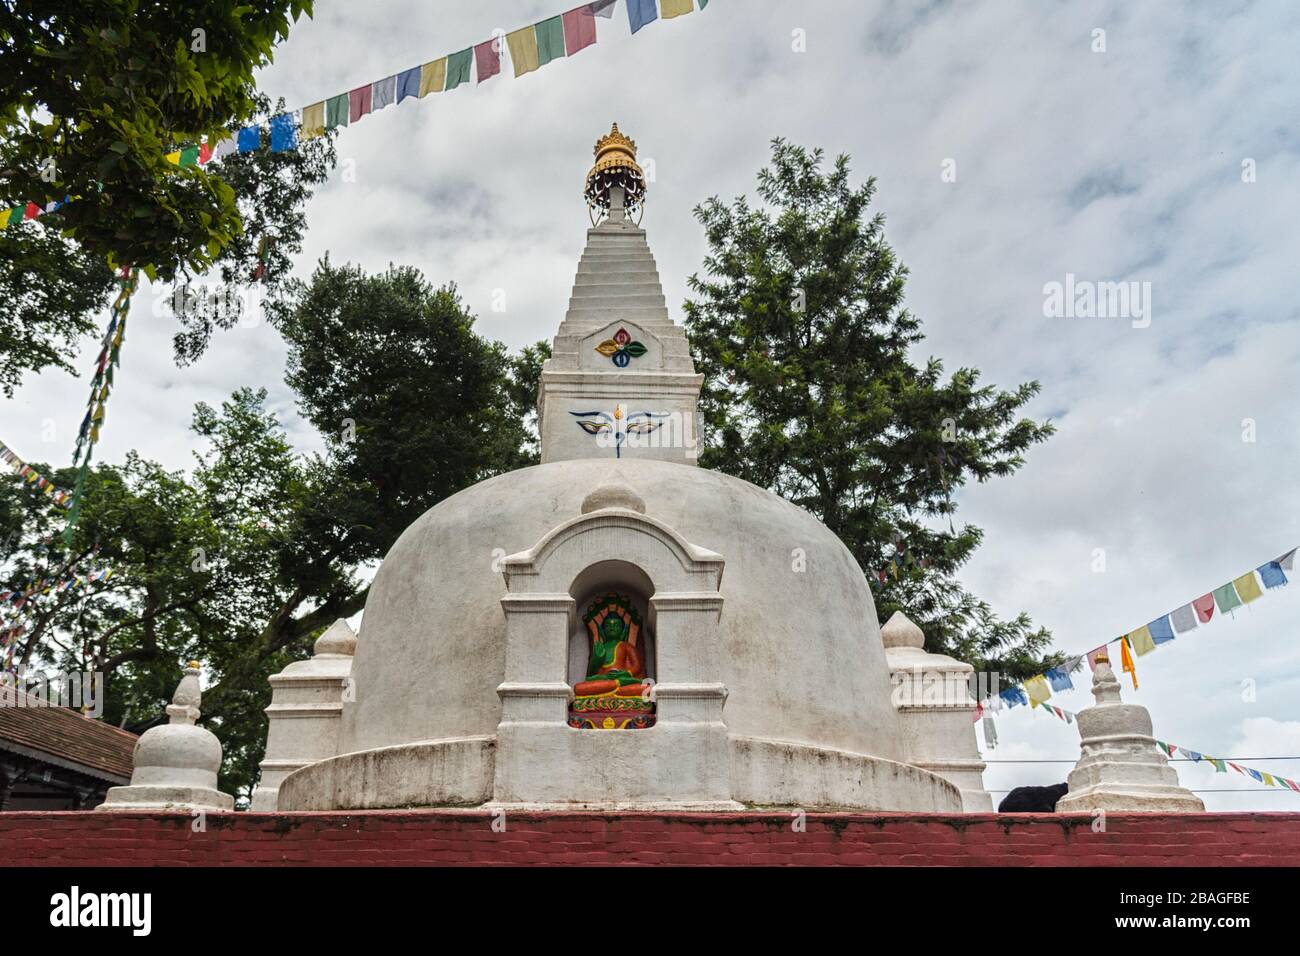 KATHMANDU, NEPAL - AGOSTO, 24 2018: Swayambhunath Stupa o tempio delle scimmie - Kathmandu Valley, Nepal - un sito dichiarato dall'UNESCO Foto Stock